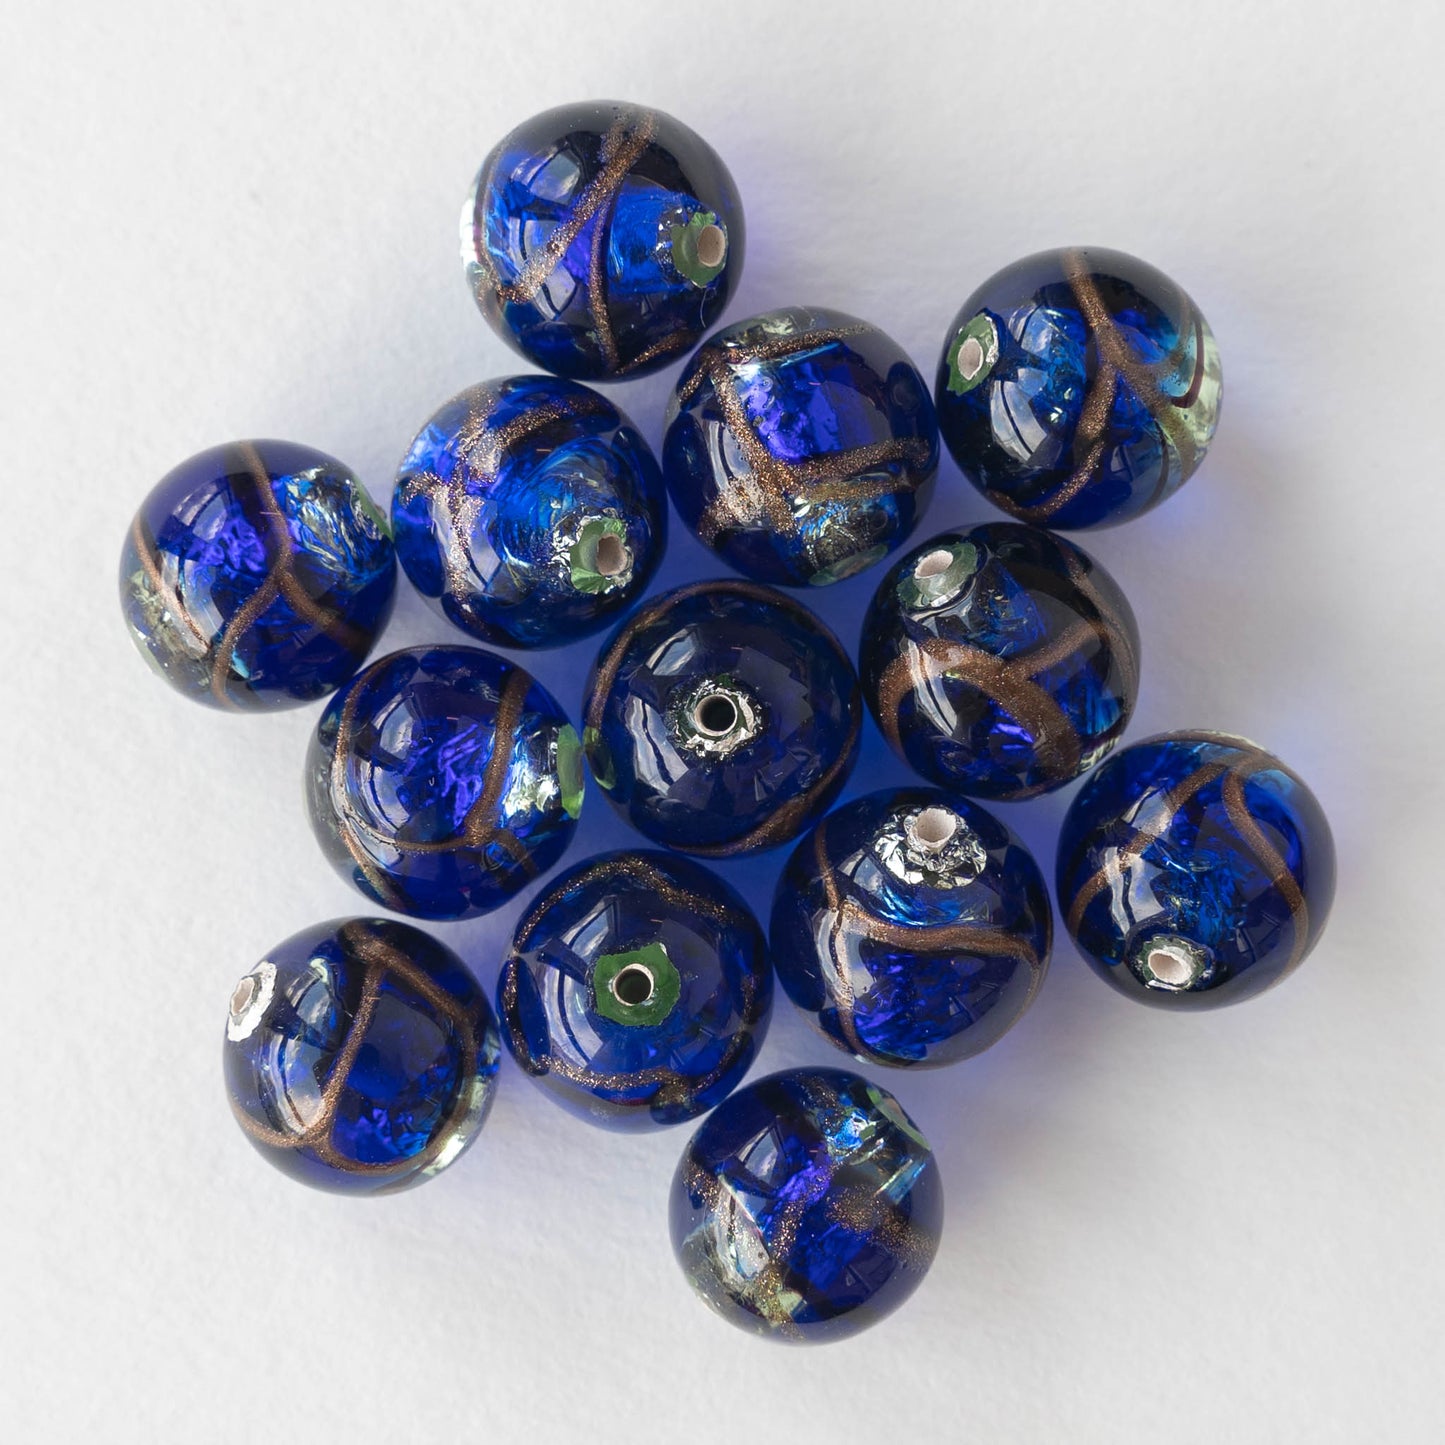 14mm Handmade Lampwork Foil Beads - Cobalt Blue - 2, 4 or 8